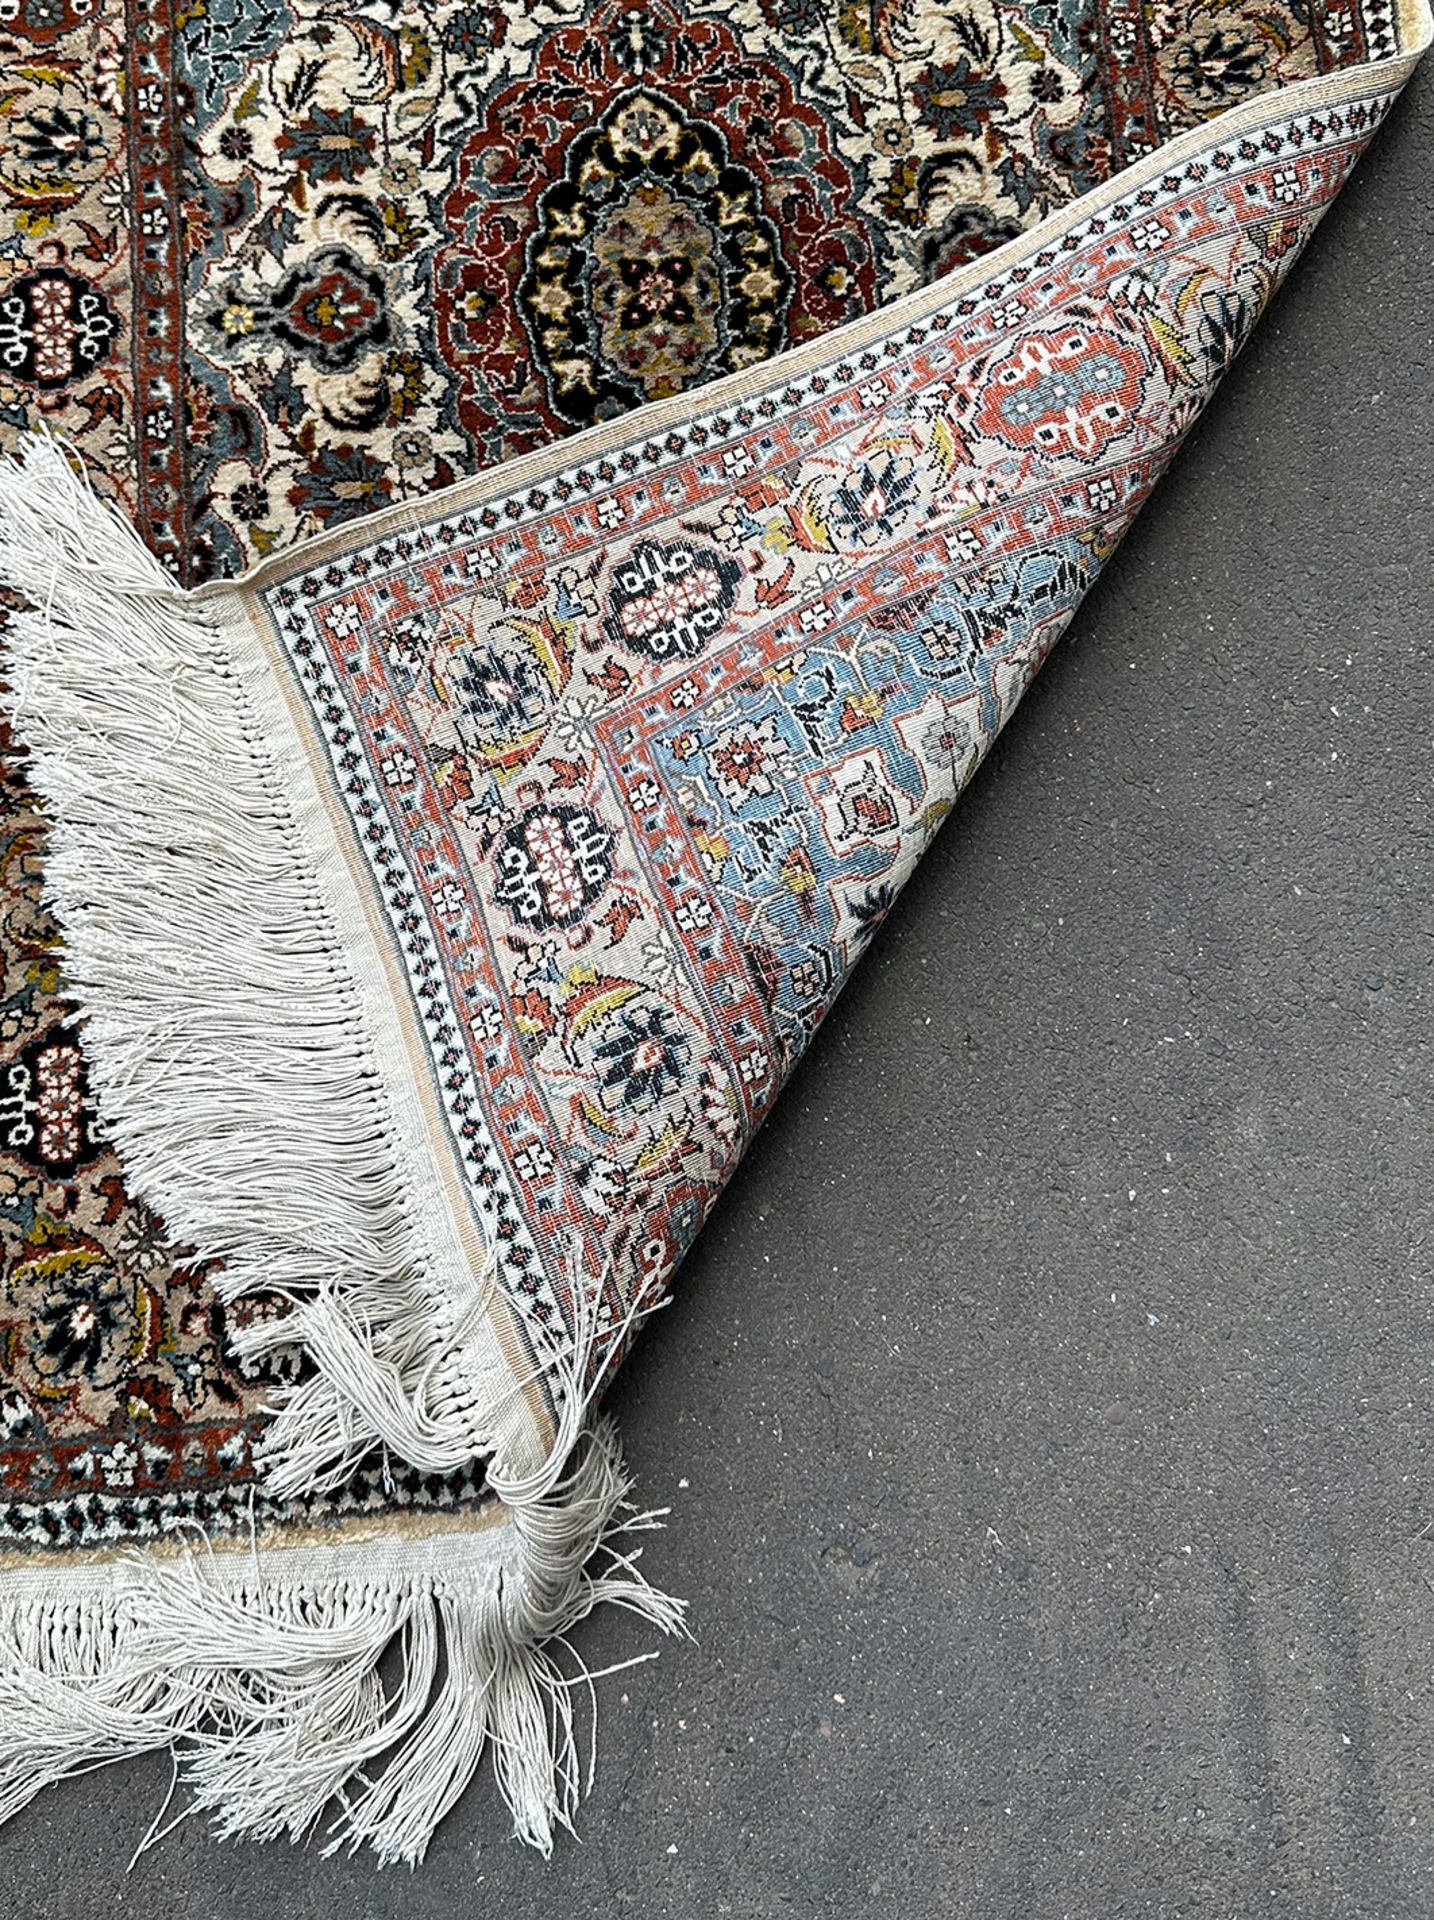 Seidenteppich 92 x 65 cm. Silk carpet 92 x 65 cm - Image 2 of 2